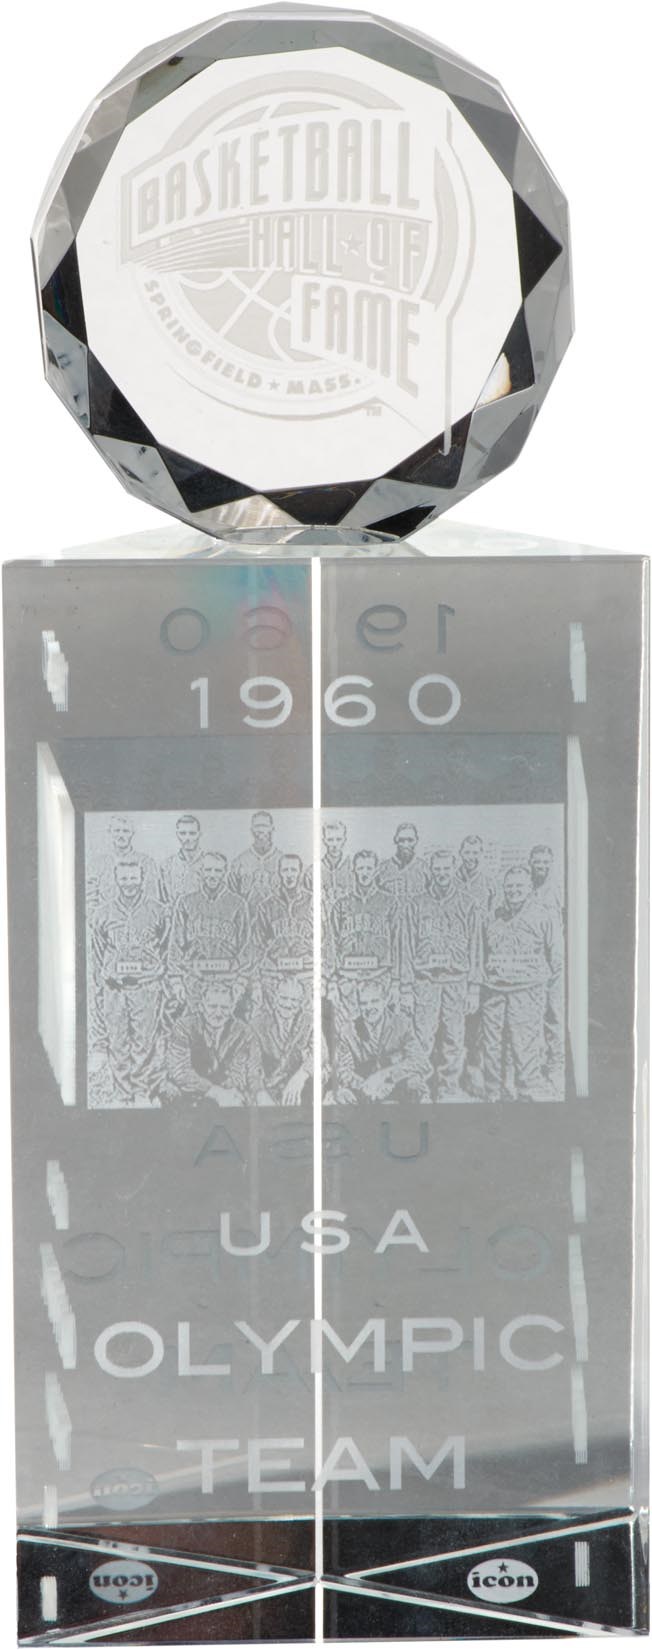 The Oscar Robertson Collection - Oscar Robertson Basketball Hall of Fame Induction Award for 1960 Olympic Team